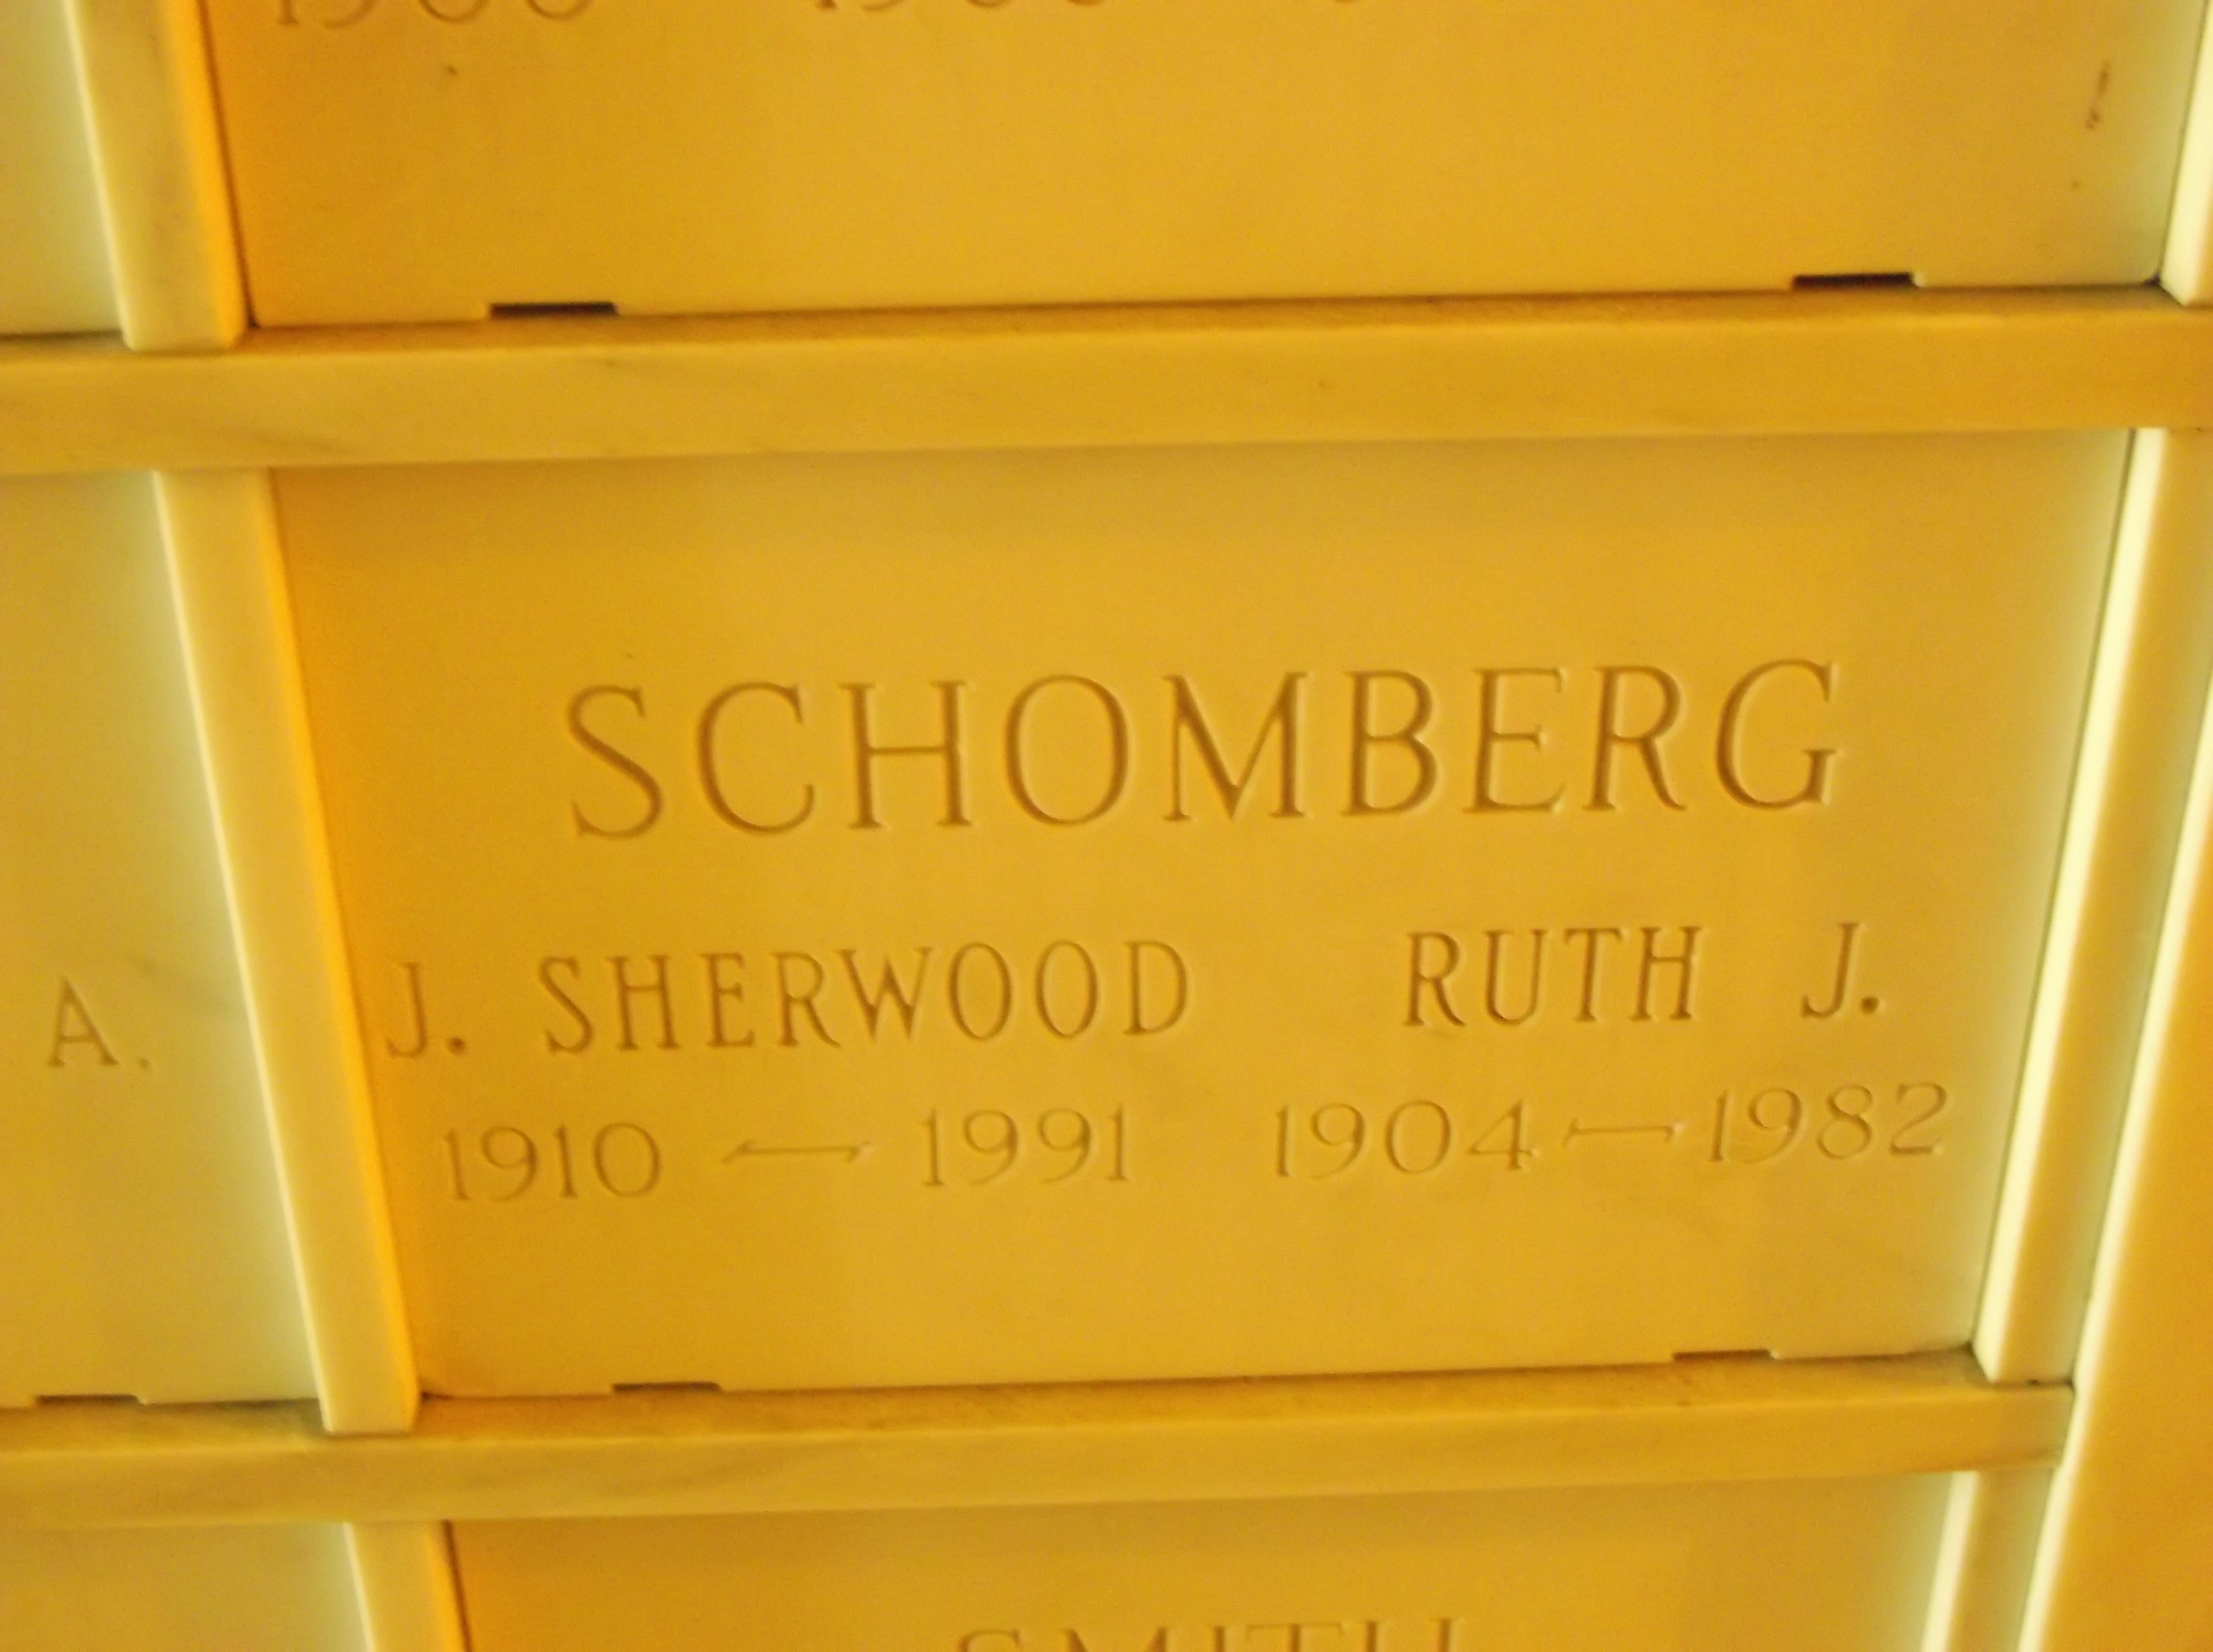 J Sherwood Schomberg